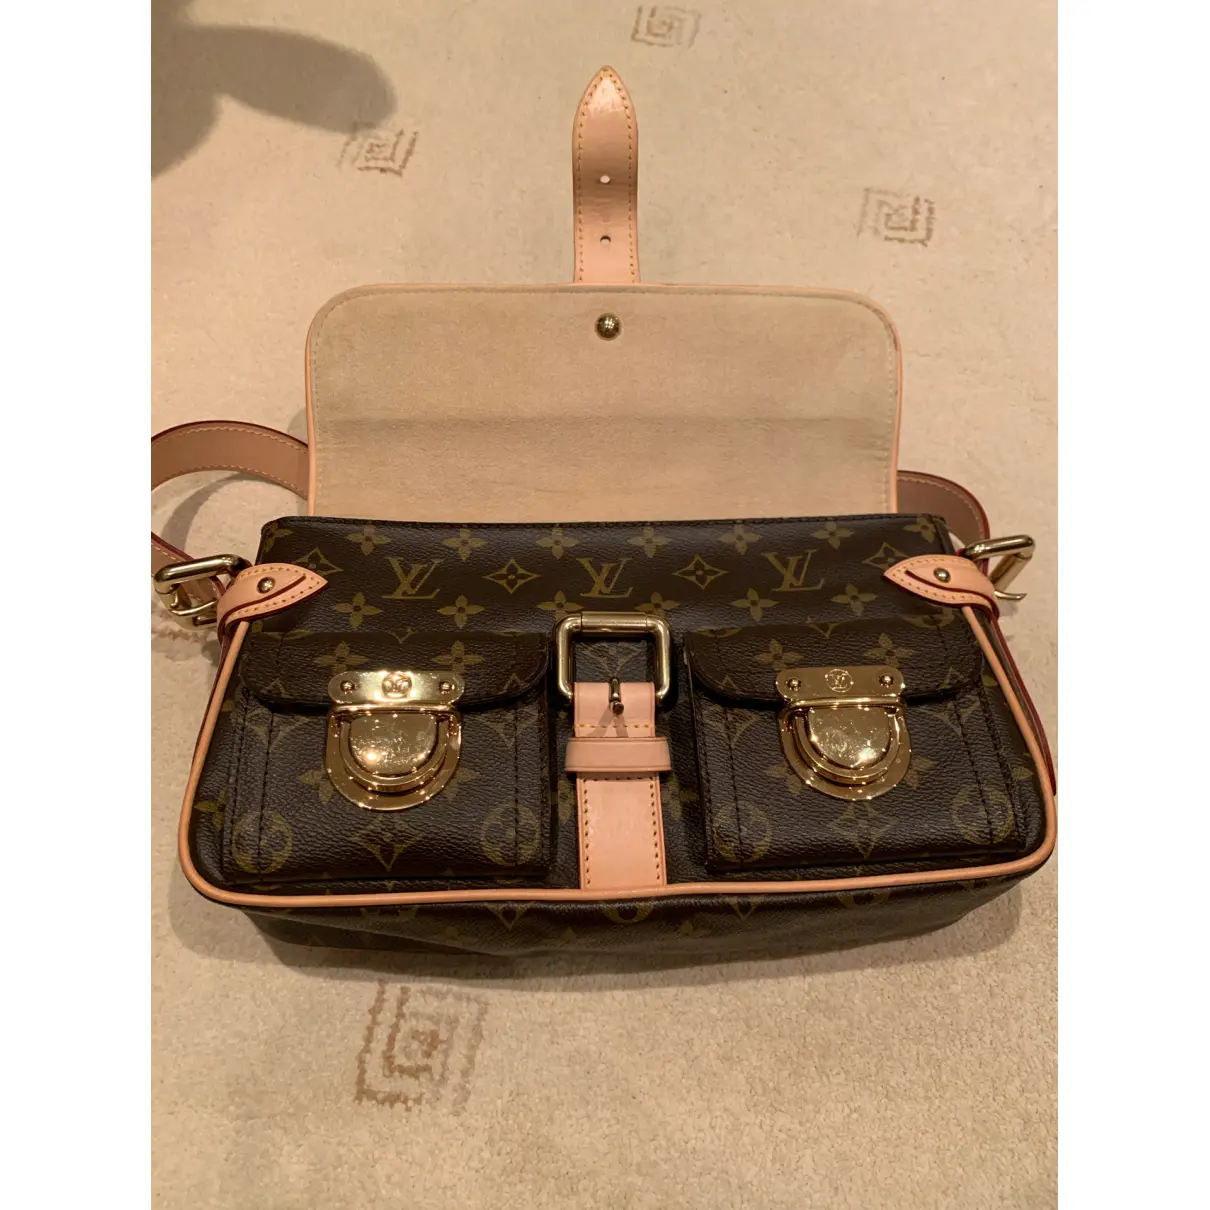 Buy Louis Vuitton Hudson leather handbag online